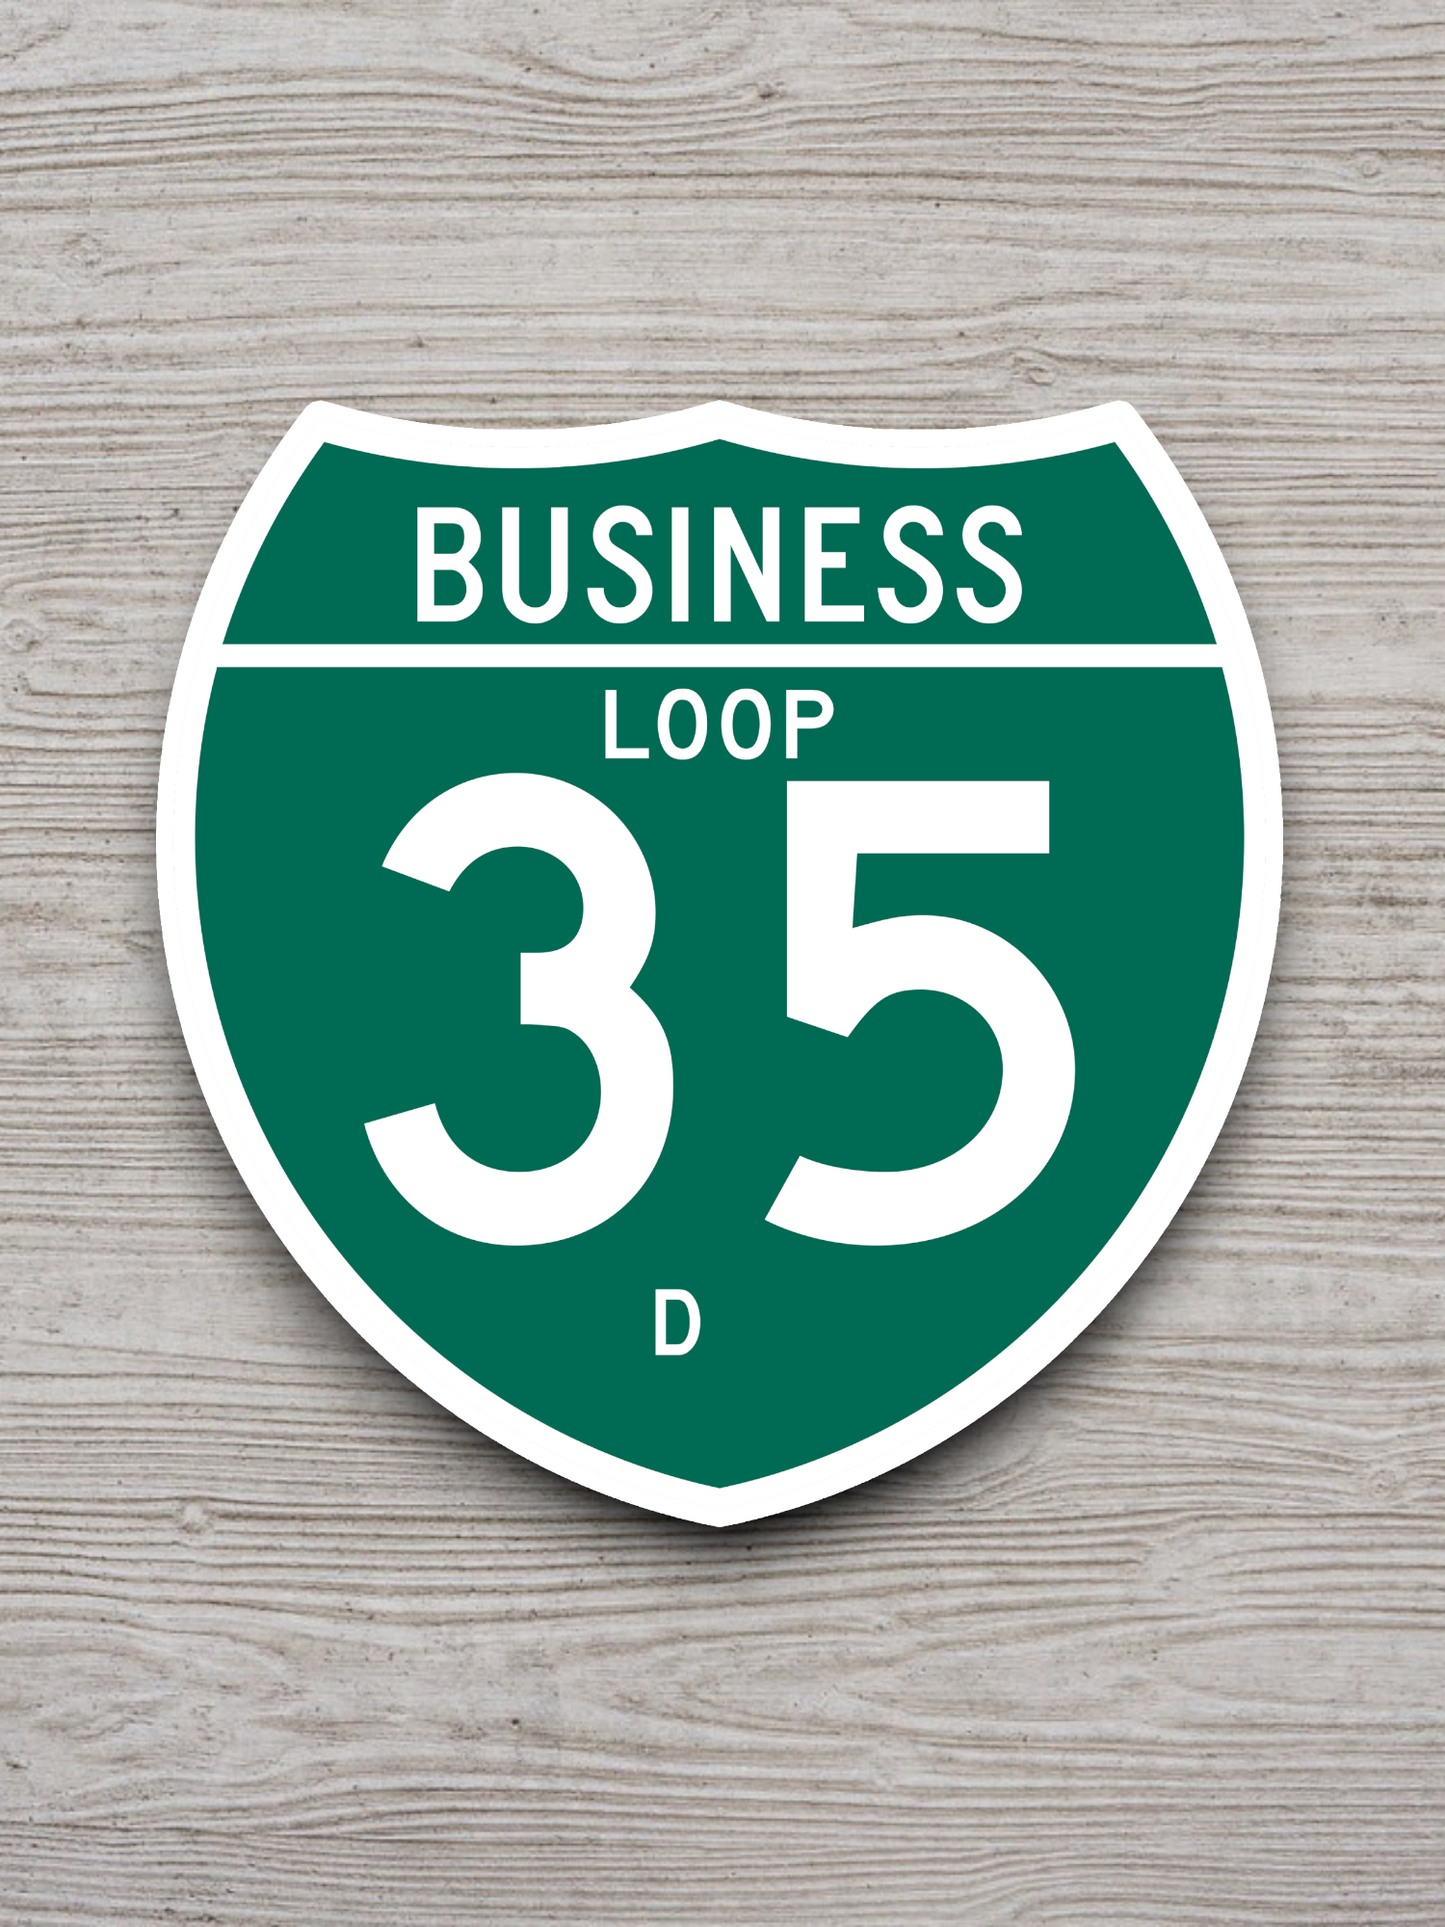 Business Spur Interstate 35-D Texas Road Sign Sticker